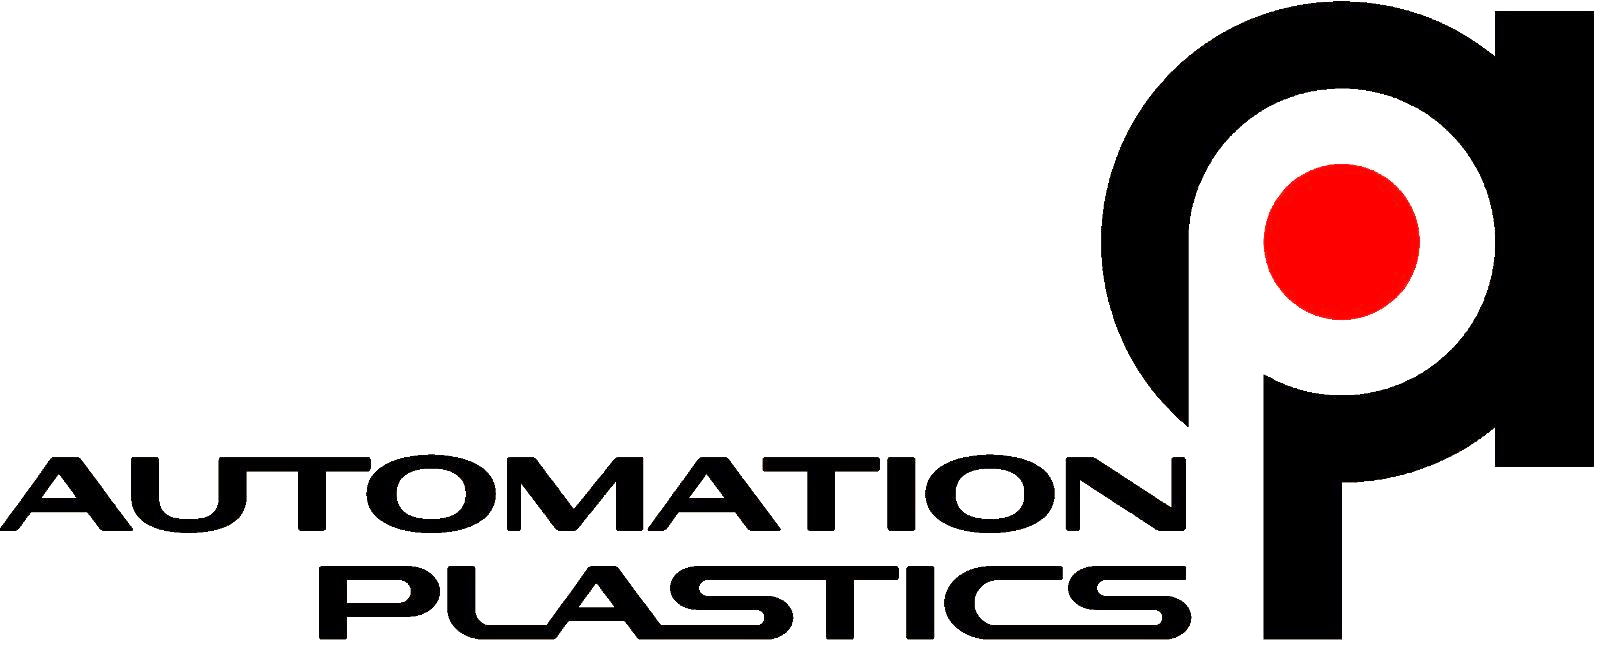 Automation Plastics logo